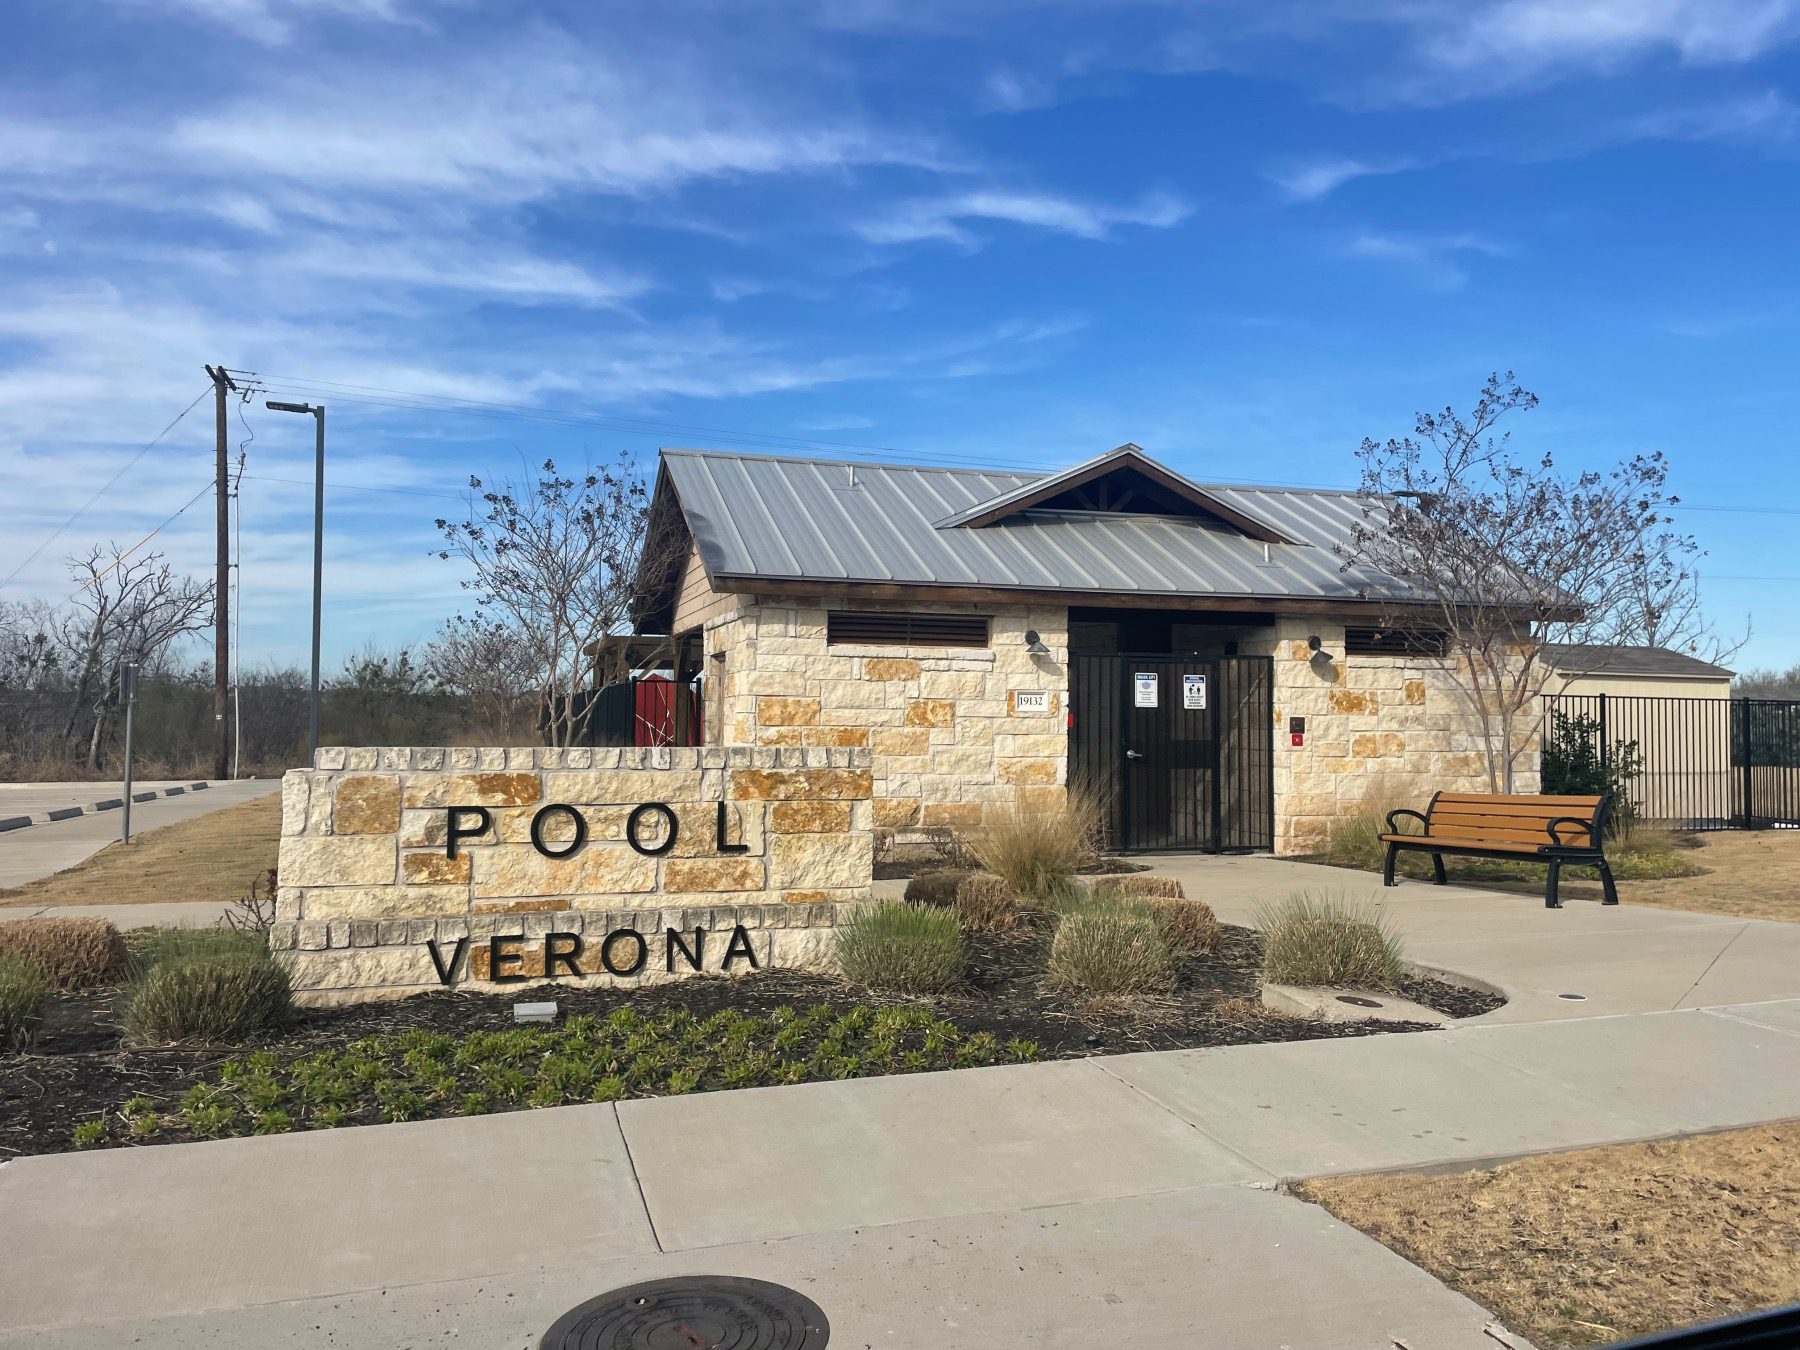 verona community pool Pflugerville texas